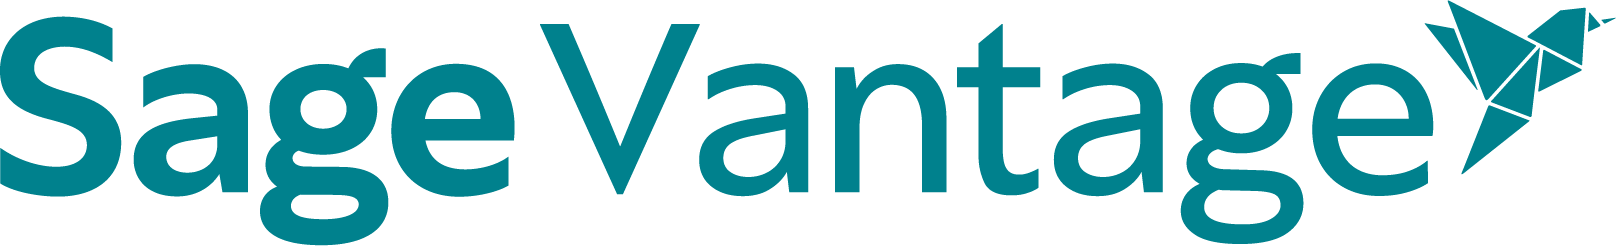 Sage Vantage logo